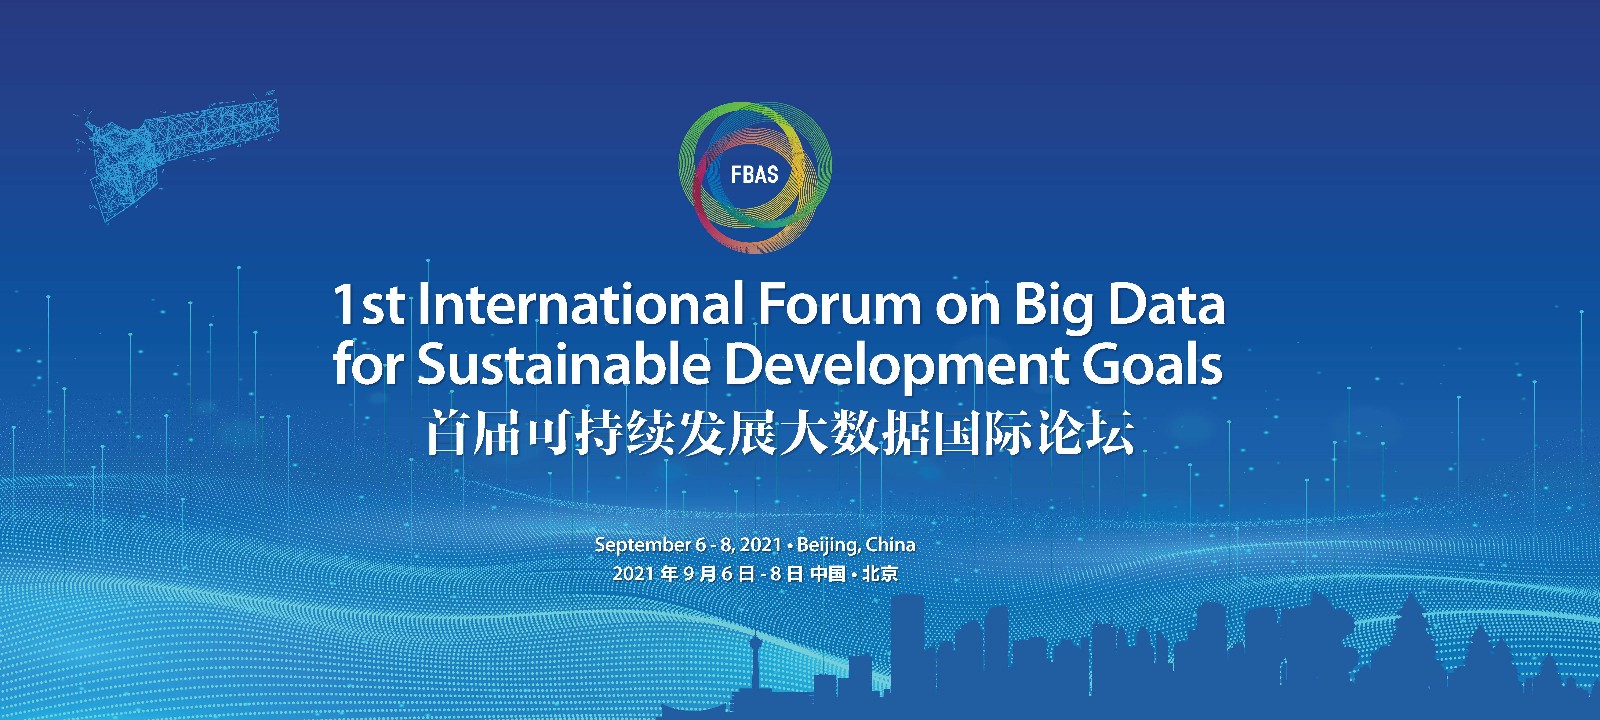 1st International Forum on Big Data for Sustainable Development Goals